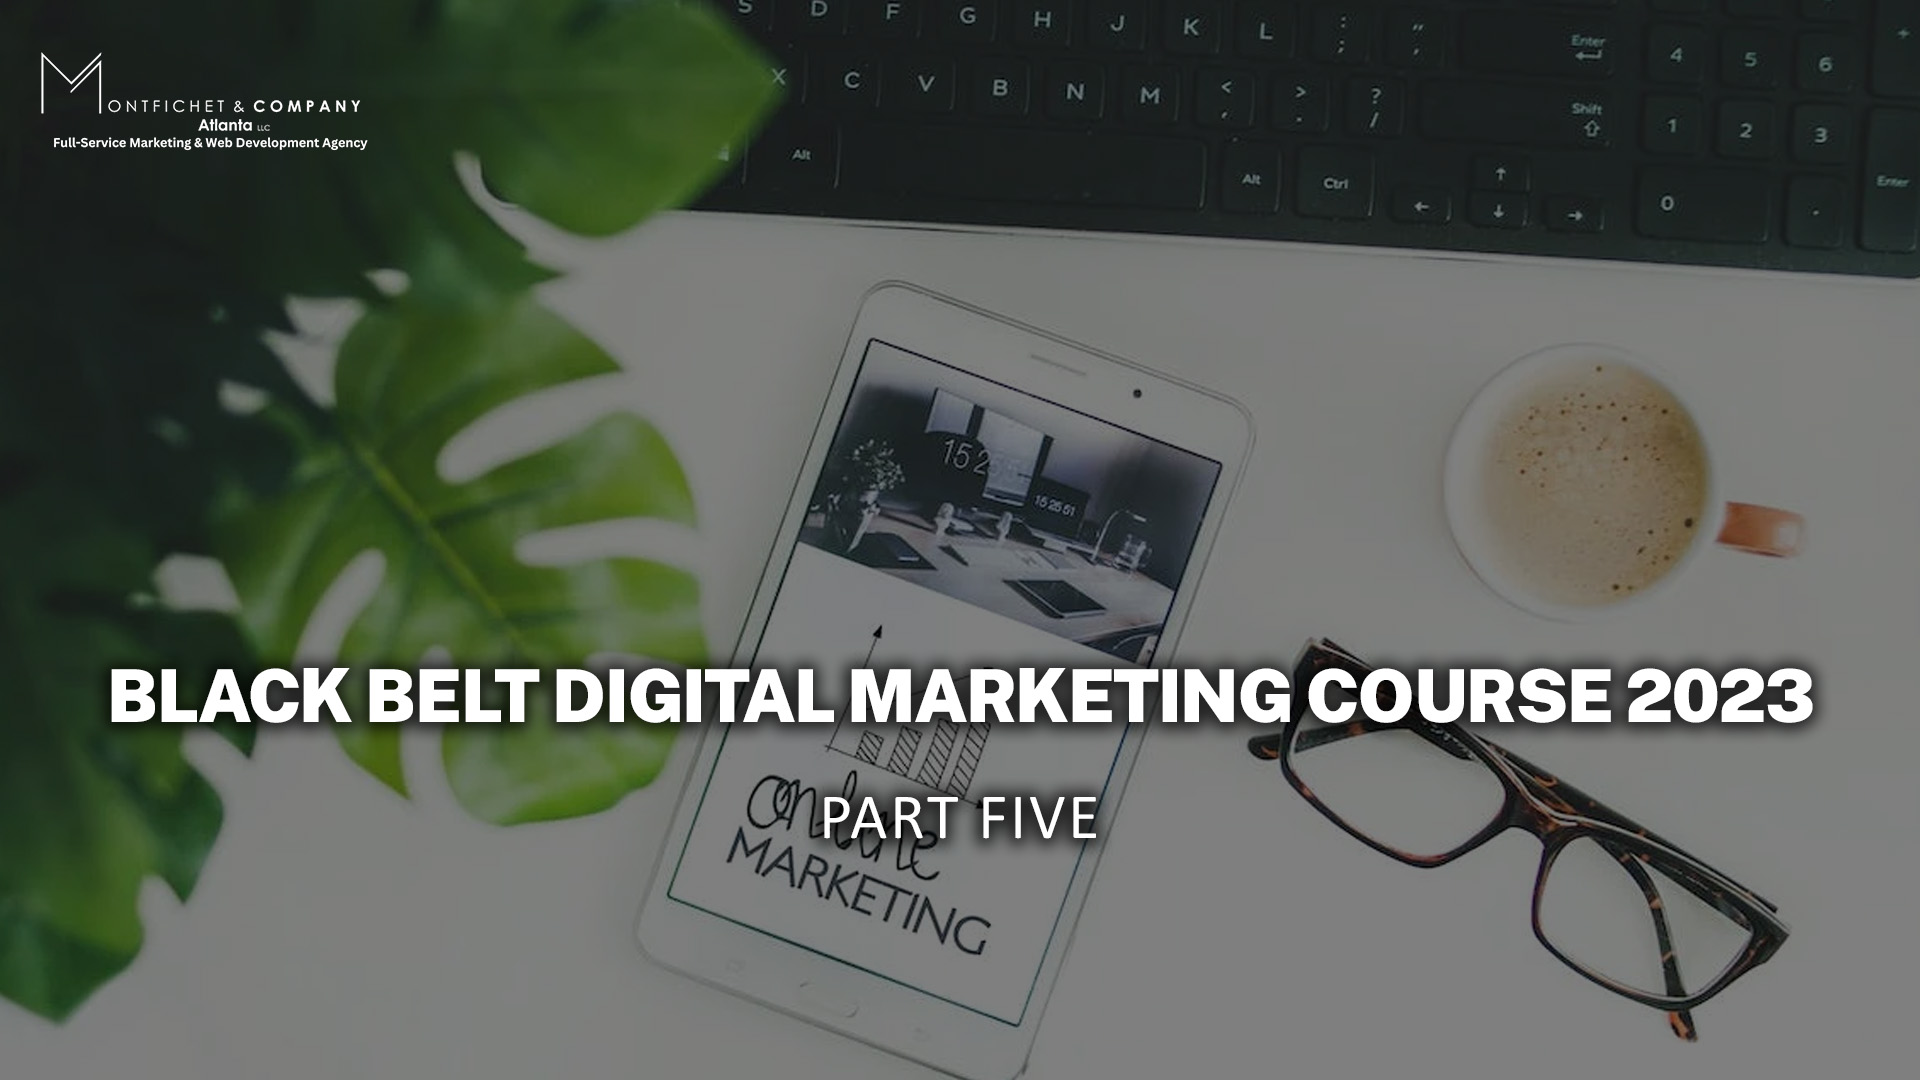 Elite Black Belt Digital Marketing Course 2023: Part Five